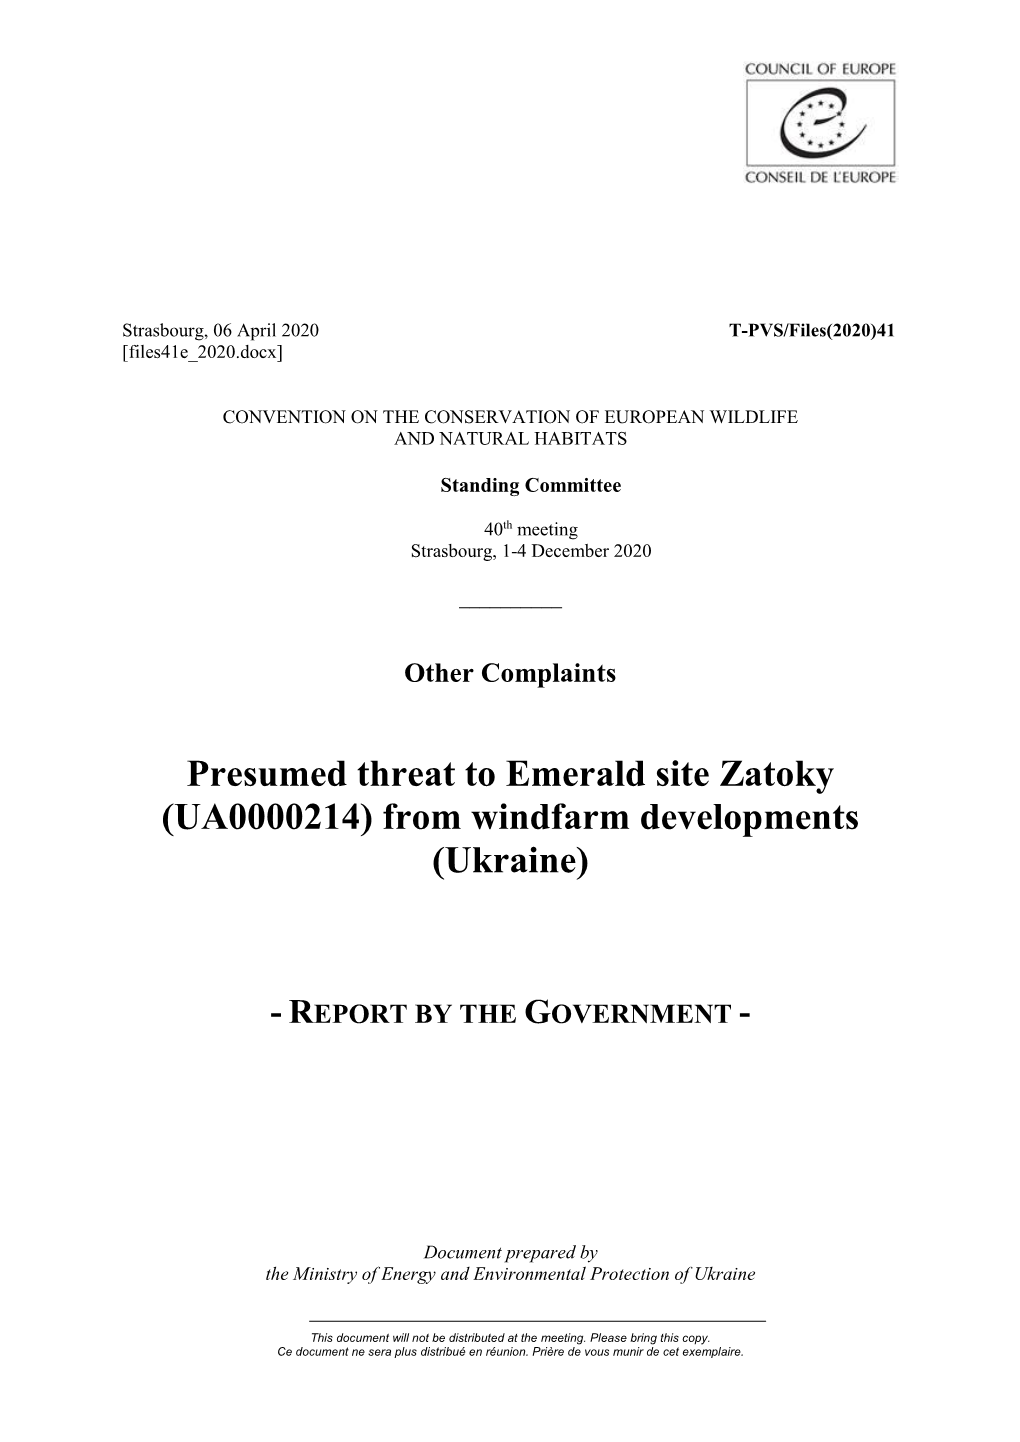 Presumed Threat to Emerald Site Zatoky (UA0000214) from Windfarm Developments (Ukraine)